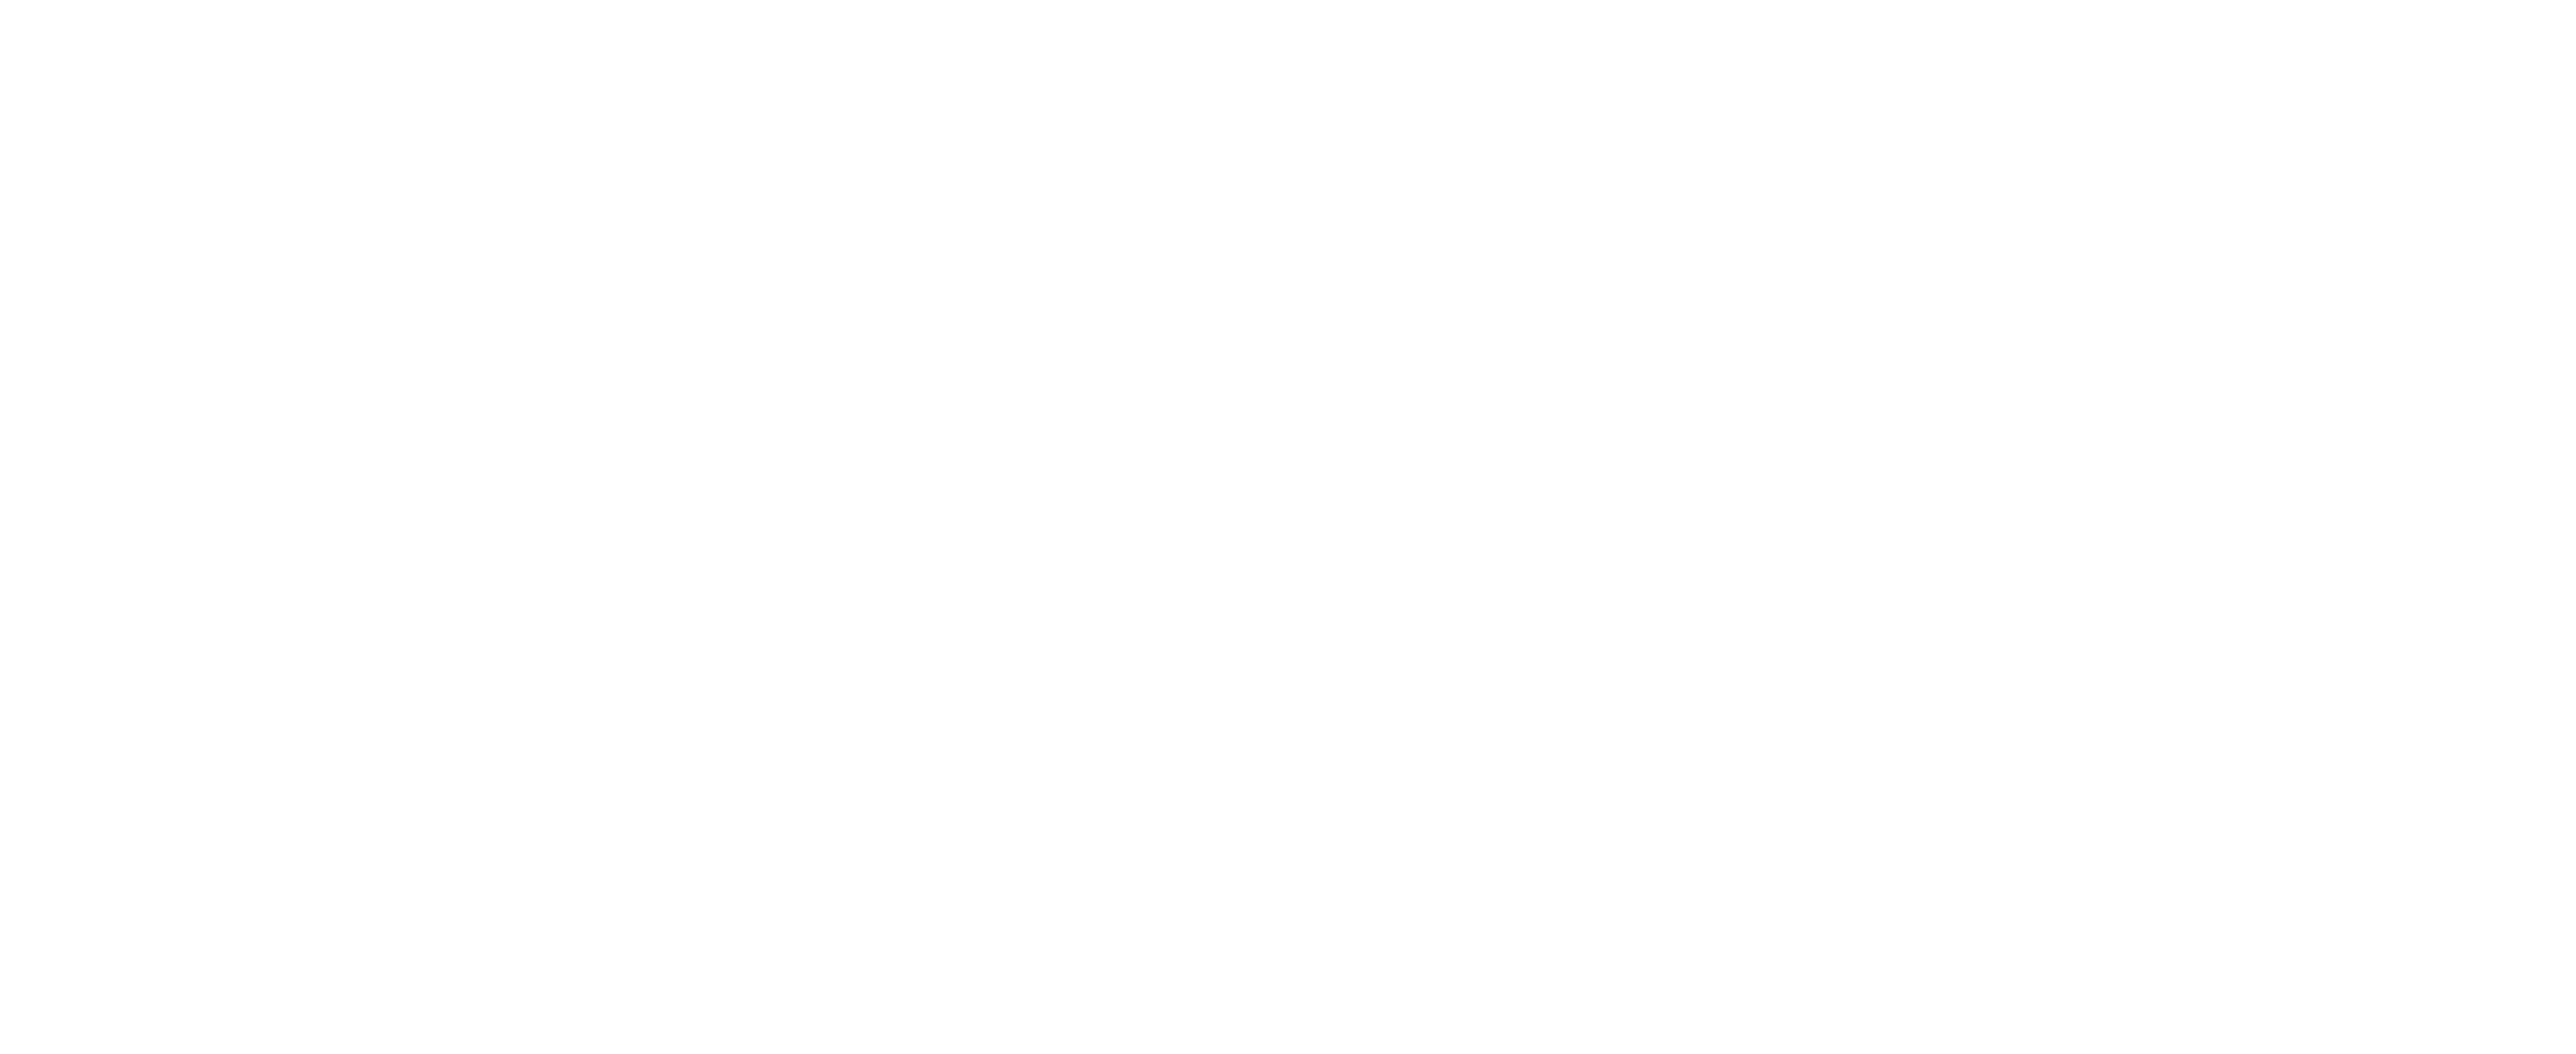 Miramonte Christian School